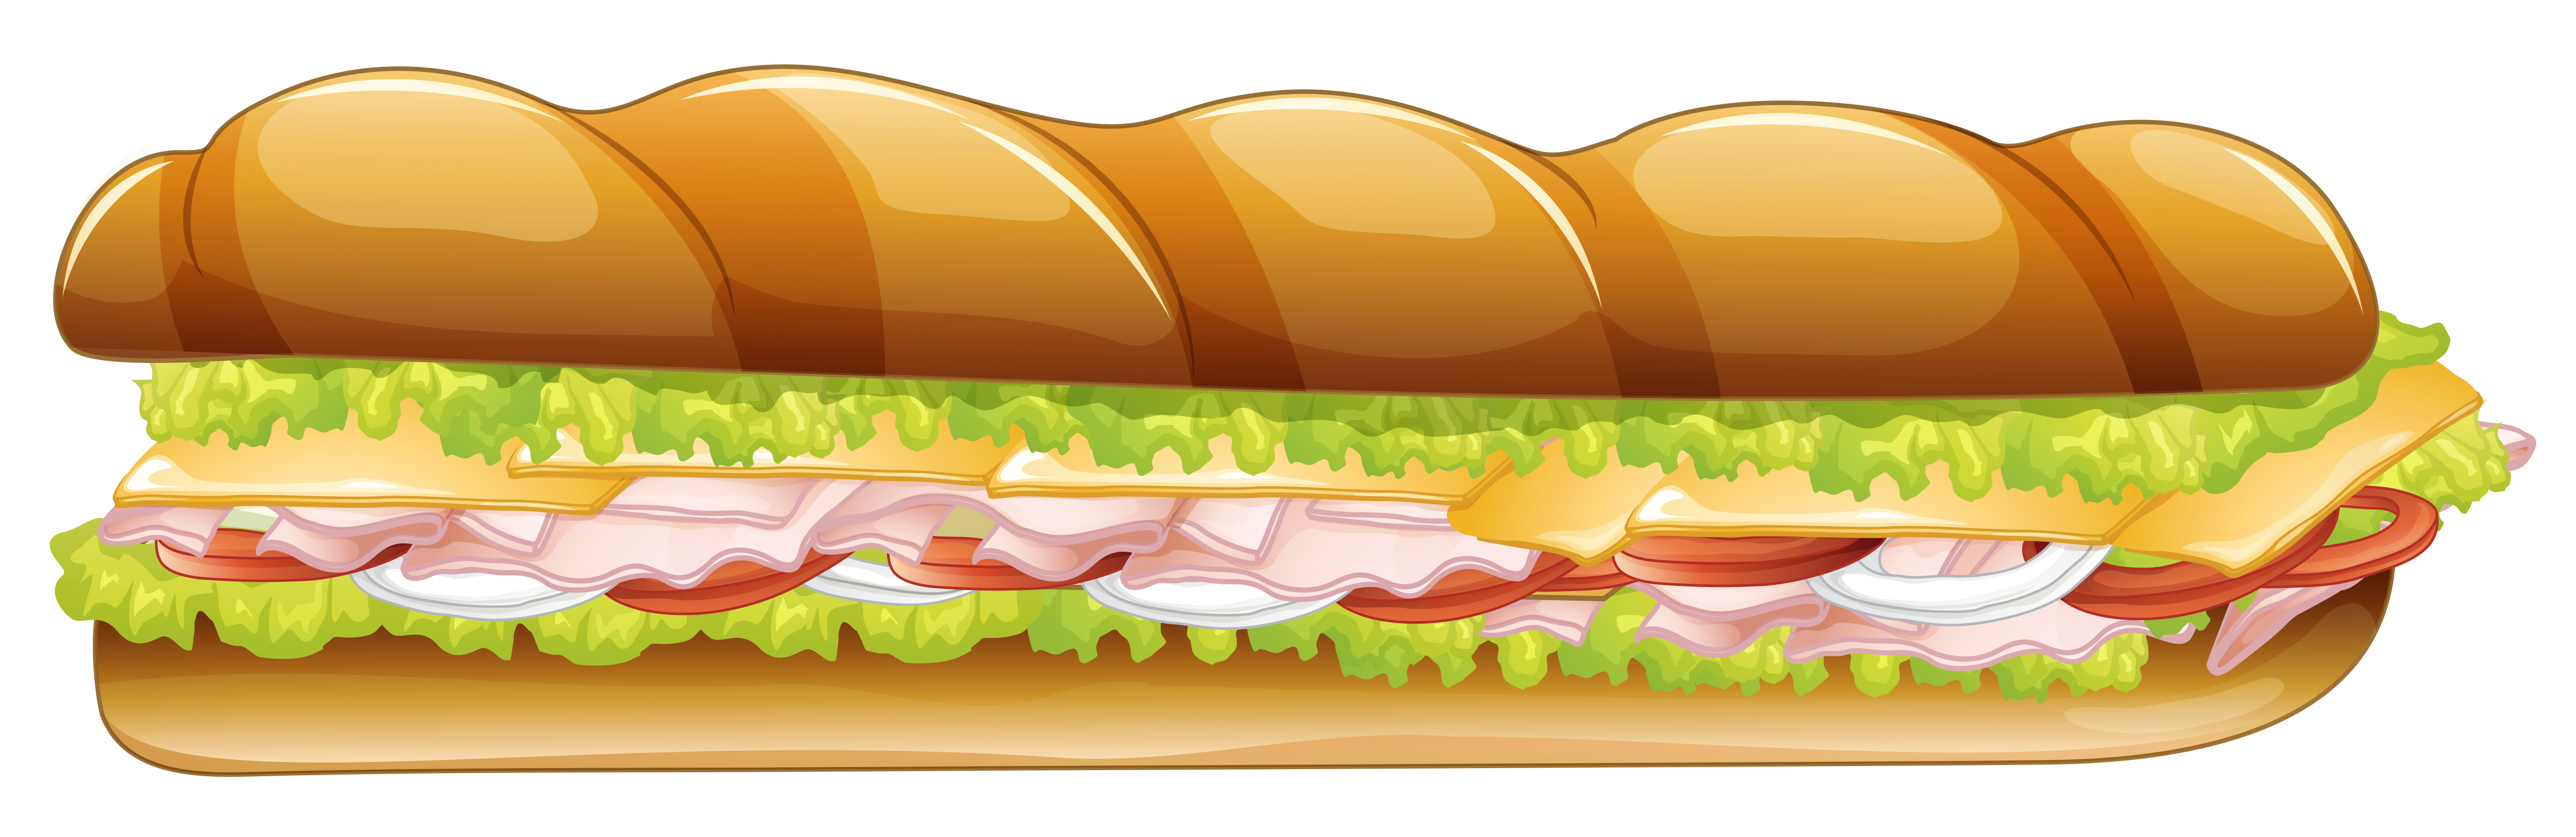 Long sandwich vector clipart image